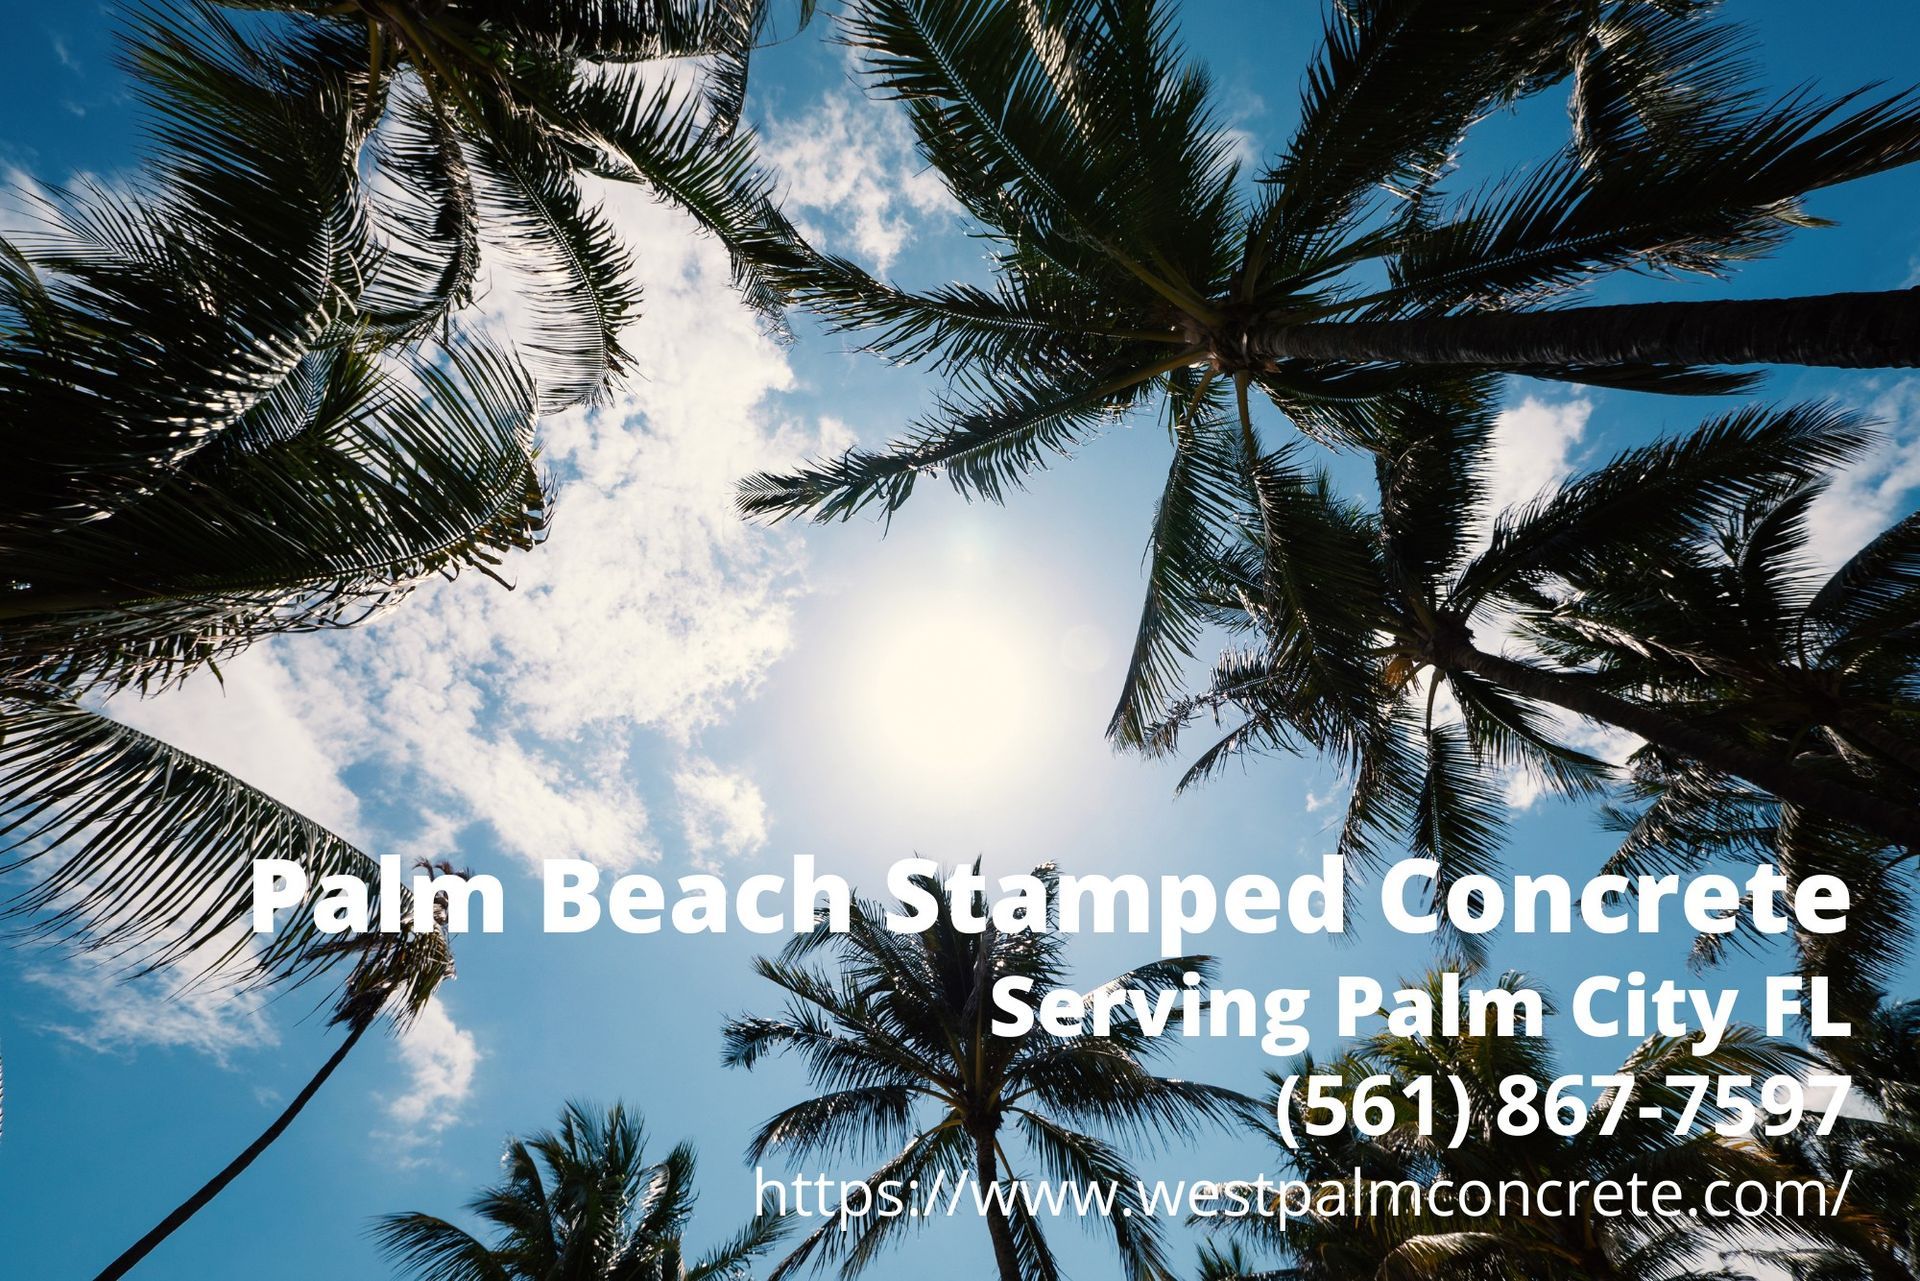 Palm City, FL palms. Text by Palm Beach Stamped Concrete - a decorative concrete company serving Palm City FL